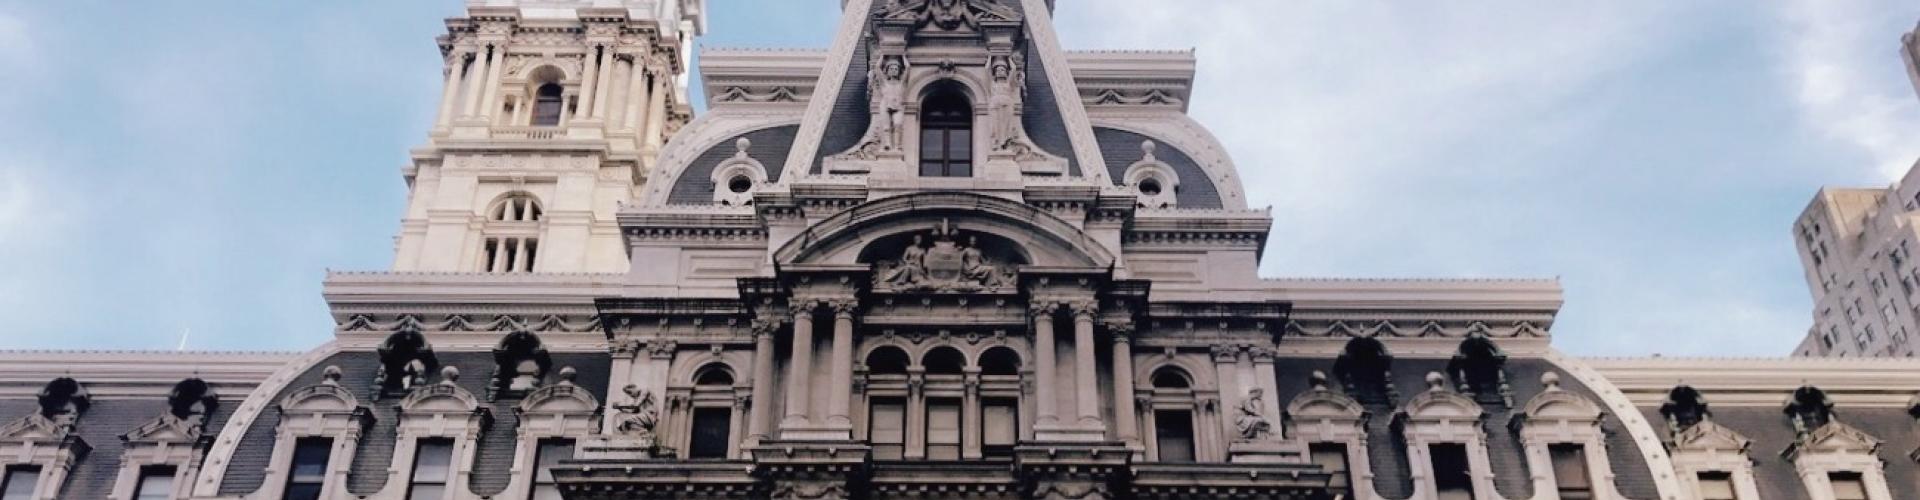 An image of Philadelphia's city hall building.